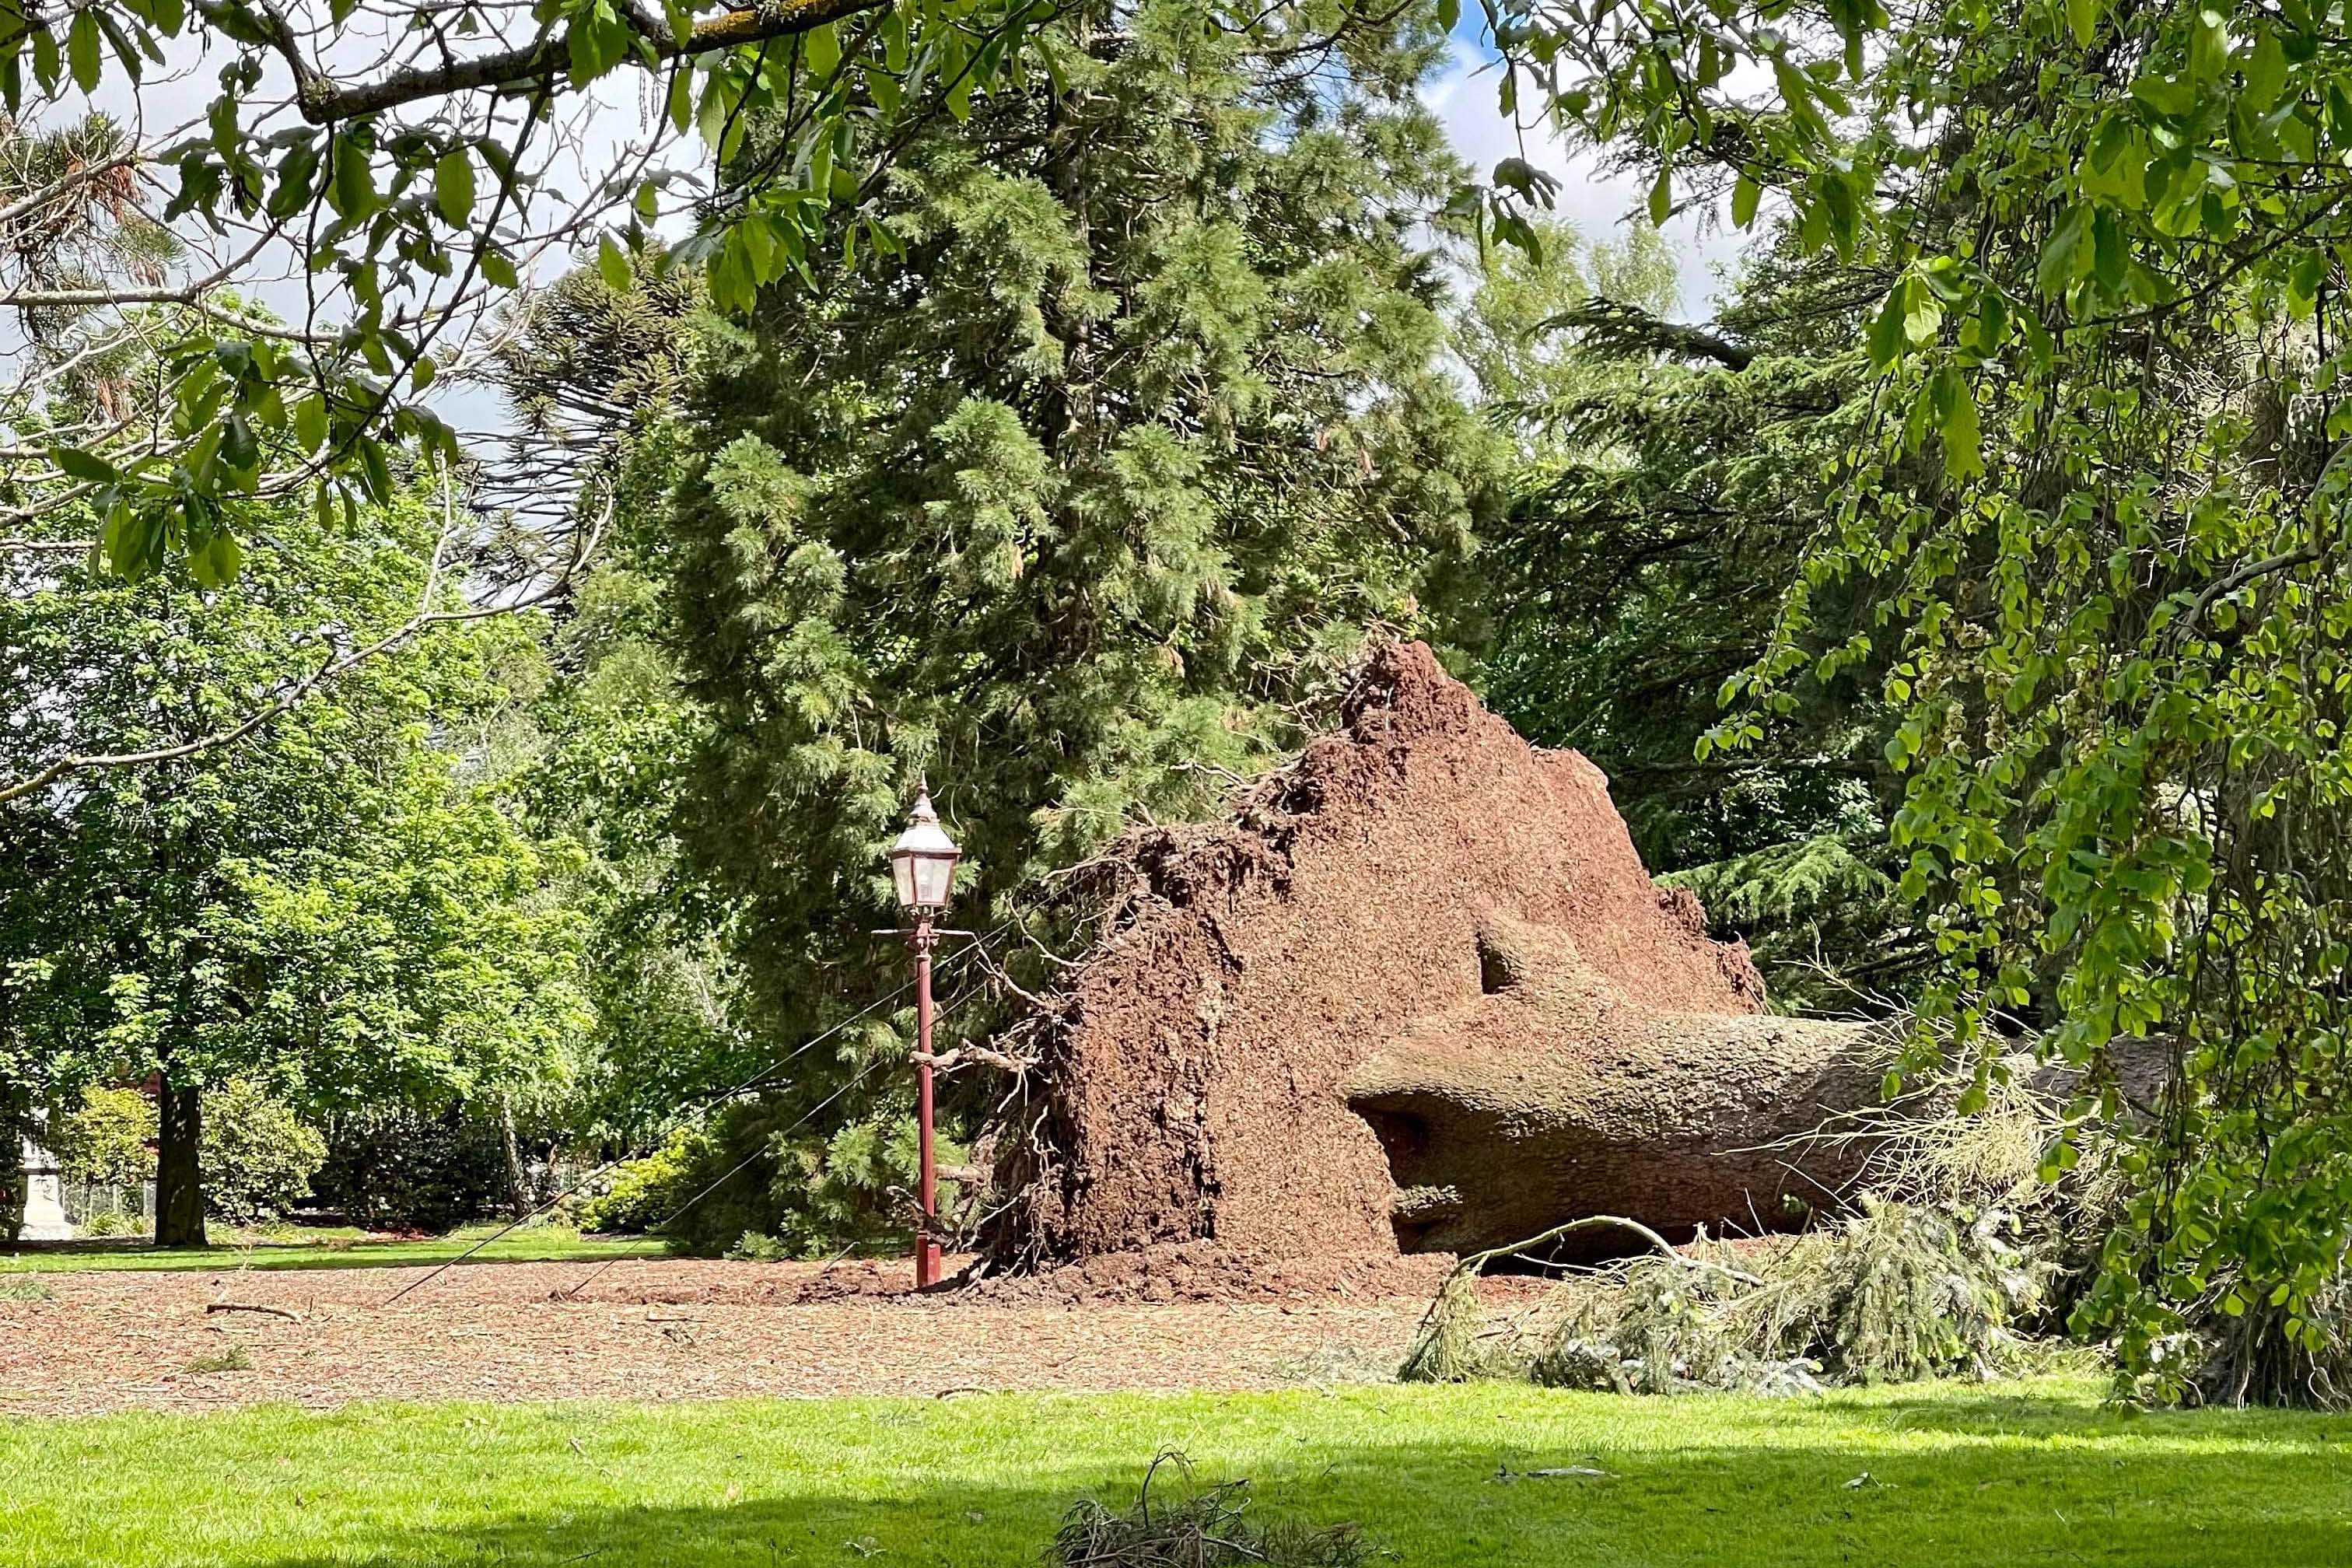 A fallen tree in the botanical gardens